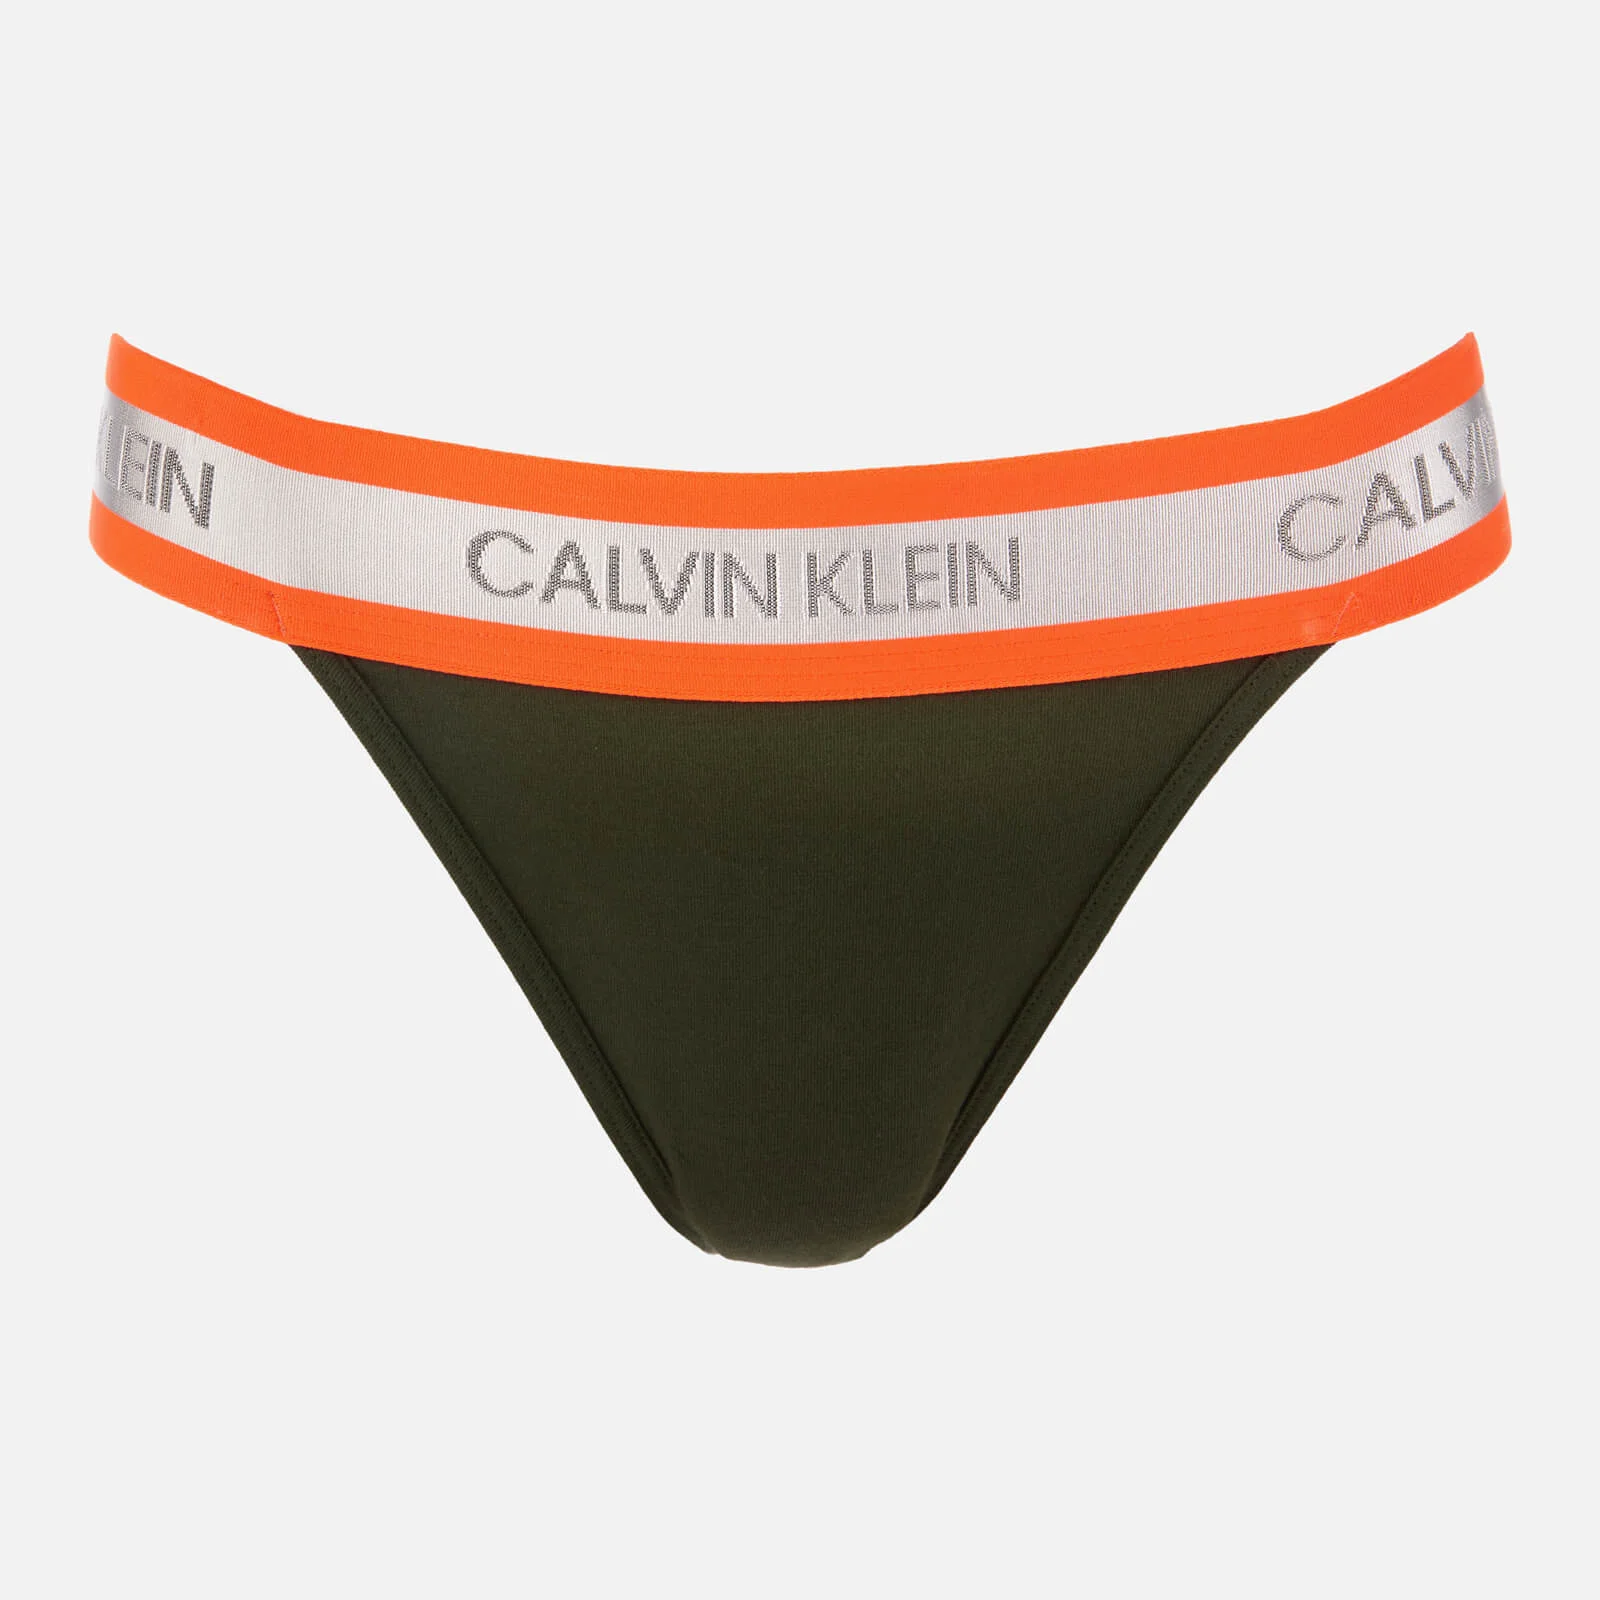 Calvin Klein Women's Neon Hi Cut Tanga Briefs - Duffel Bag Image 1